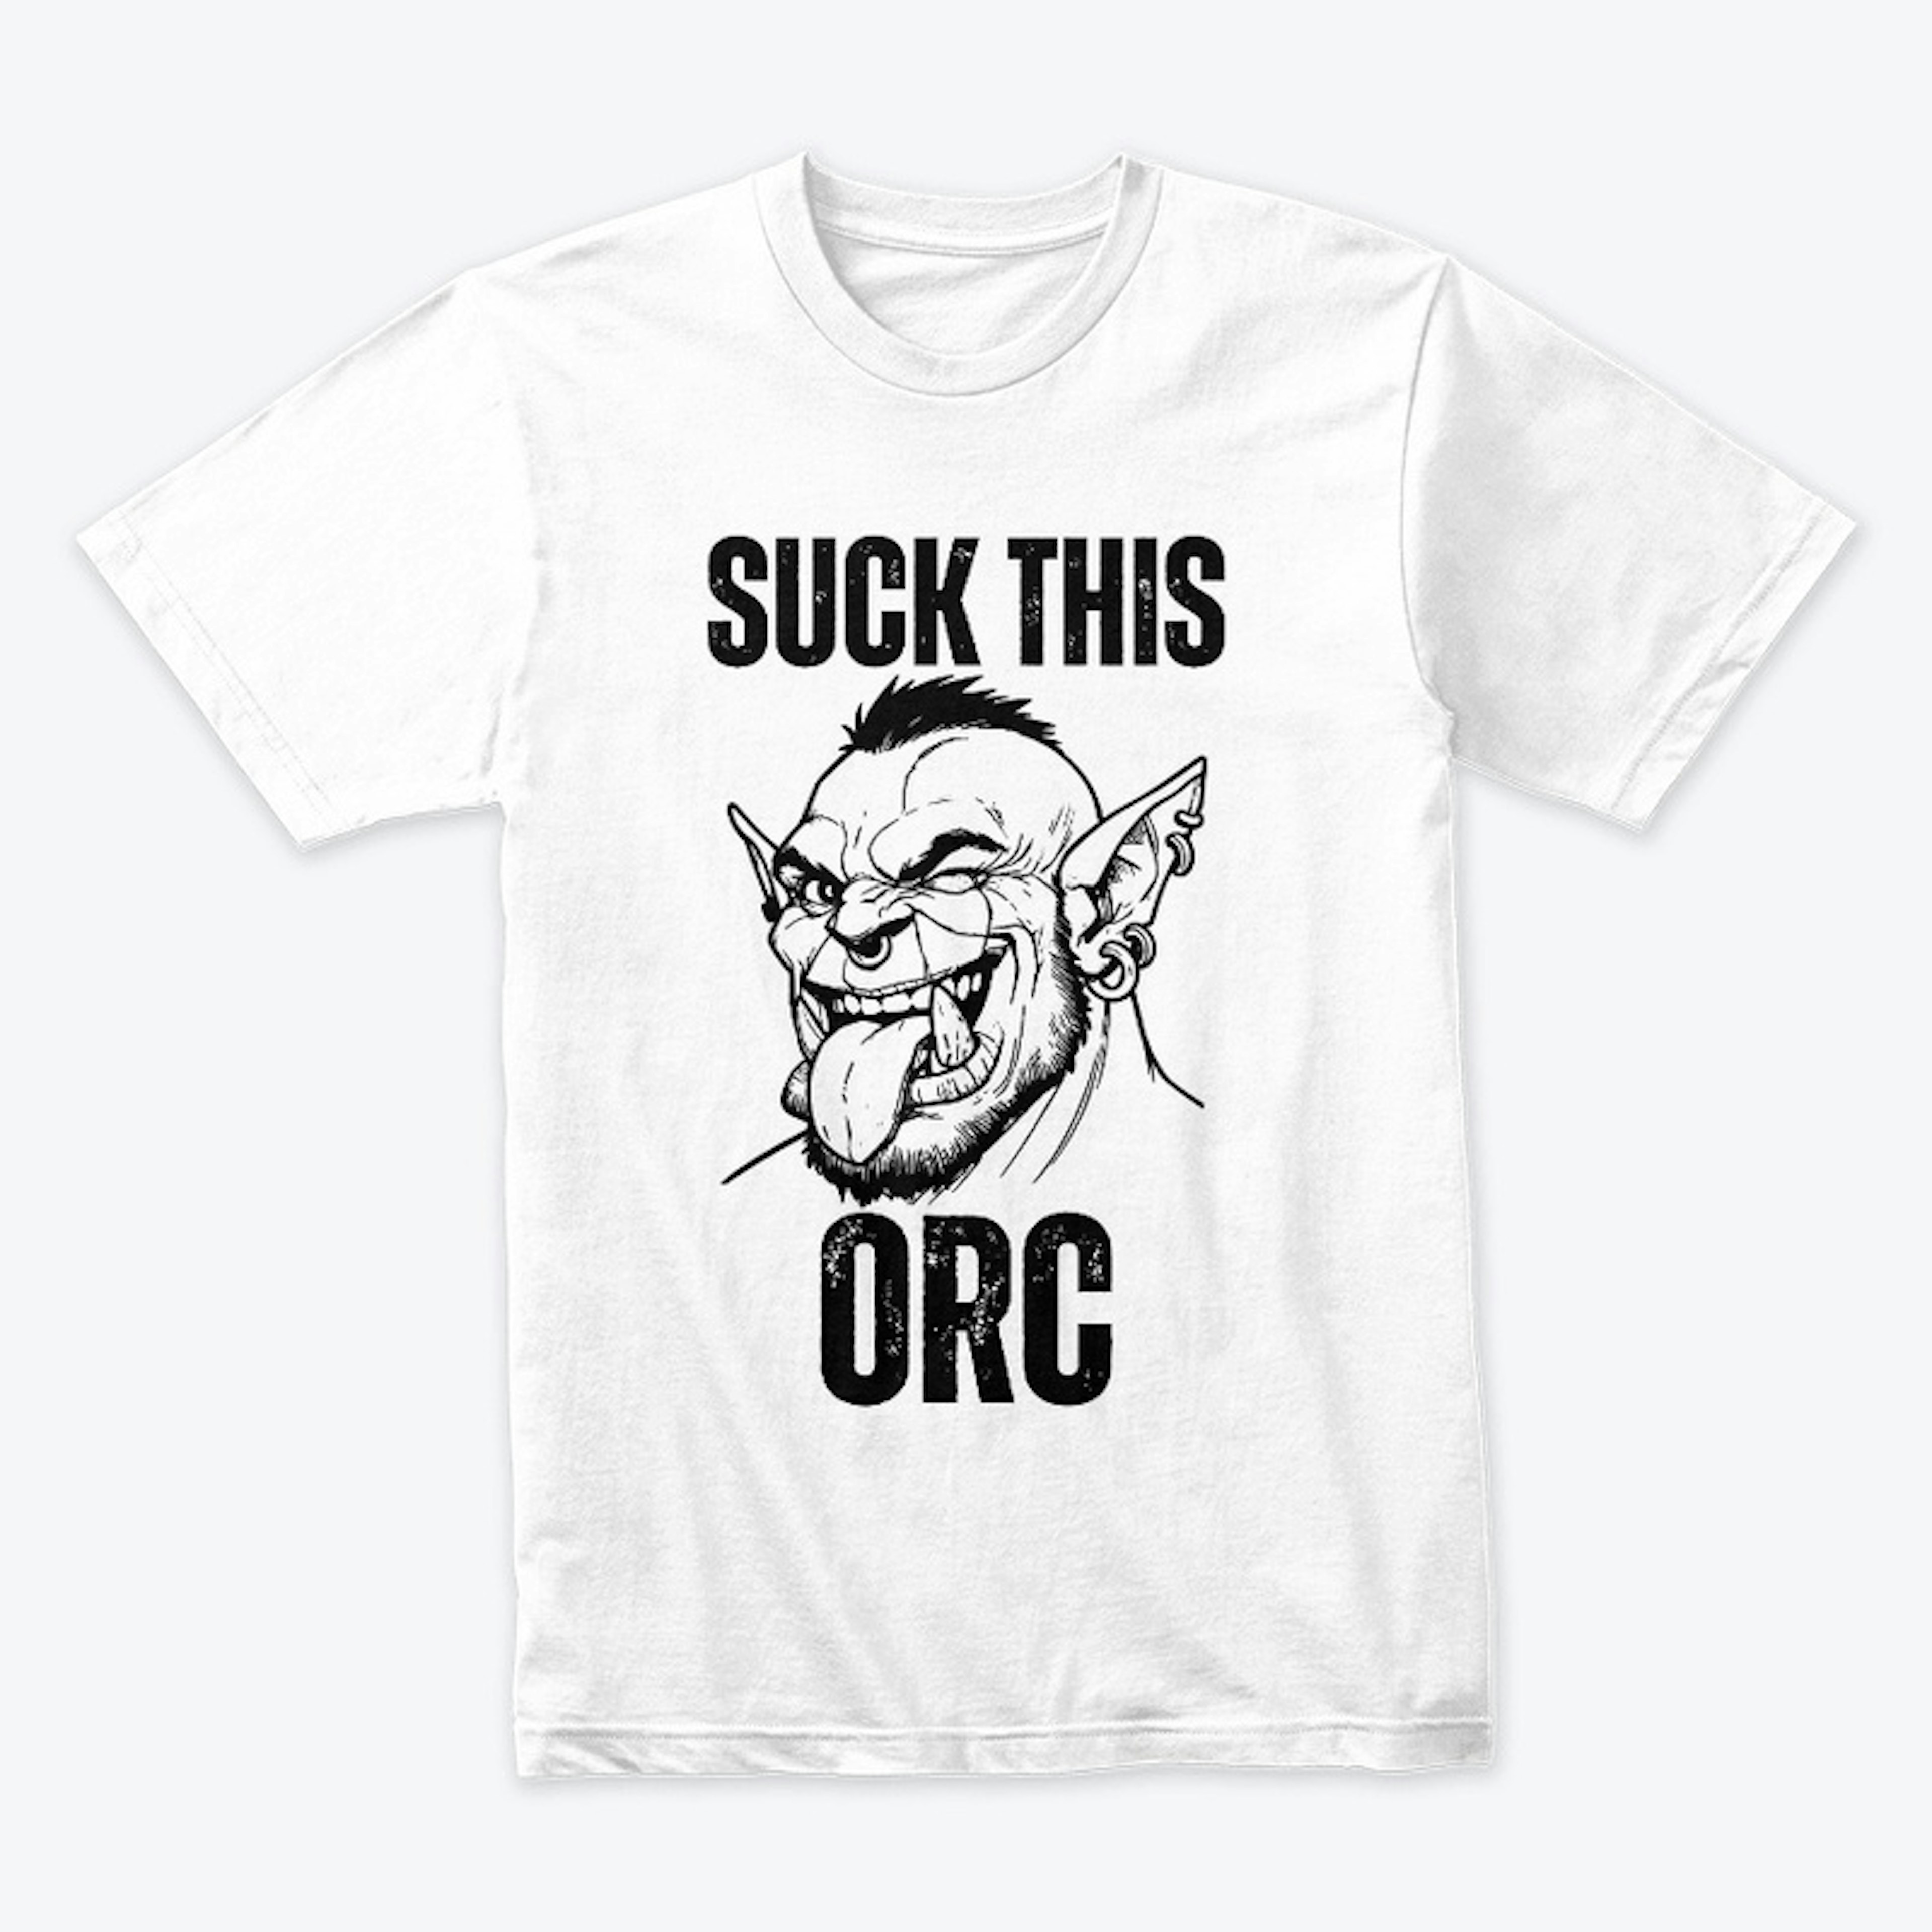 Suck this ORC!